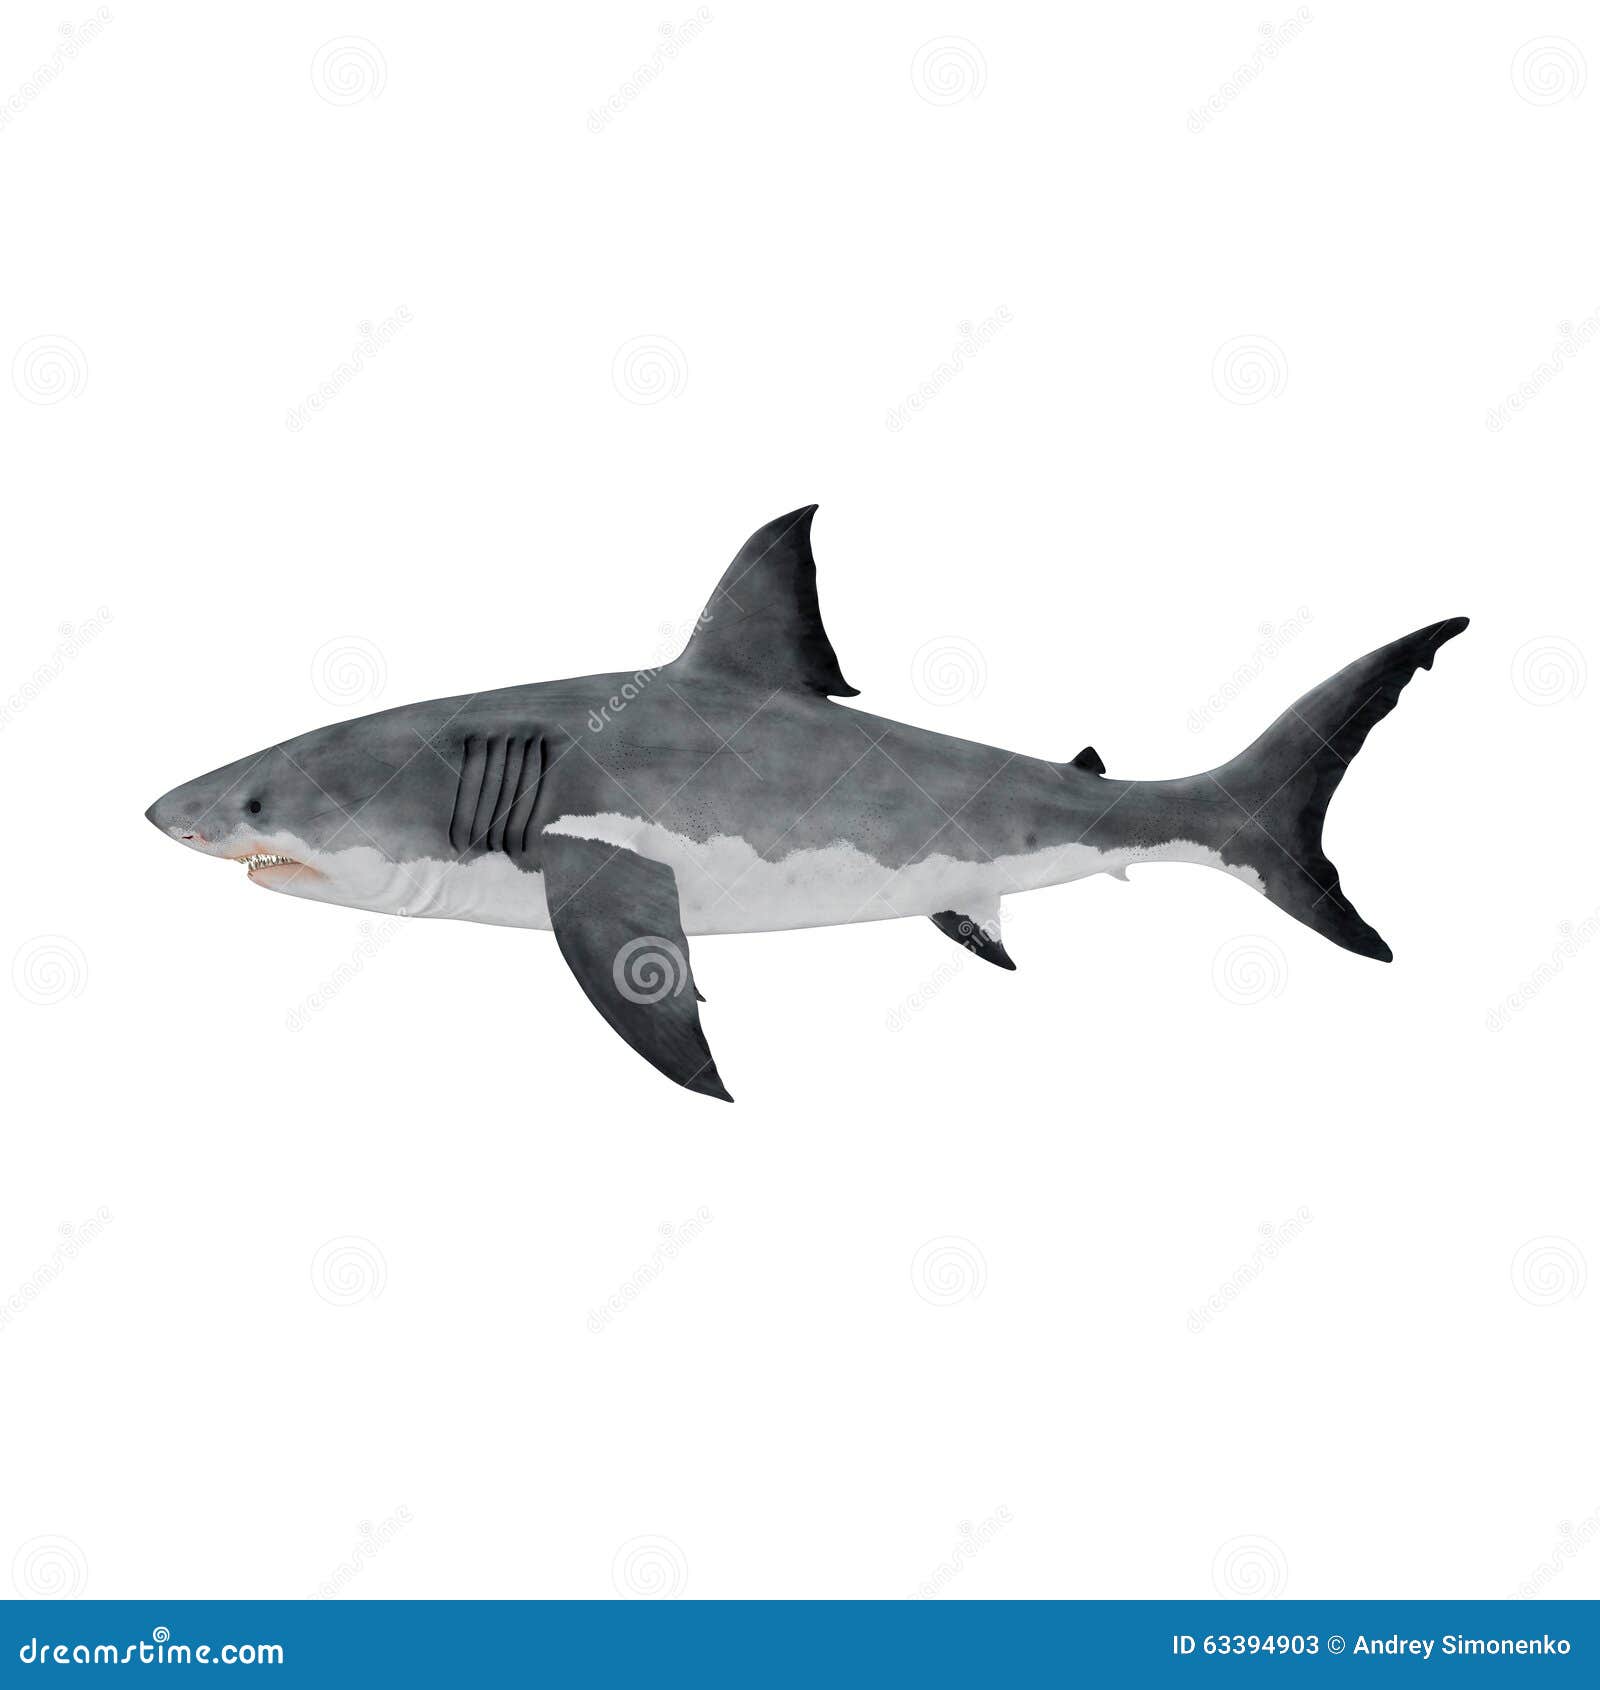 Great White Shark on White Background Stock Image - Image of teeth